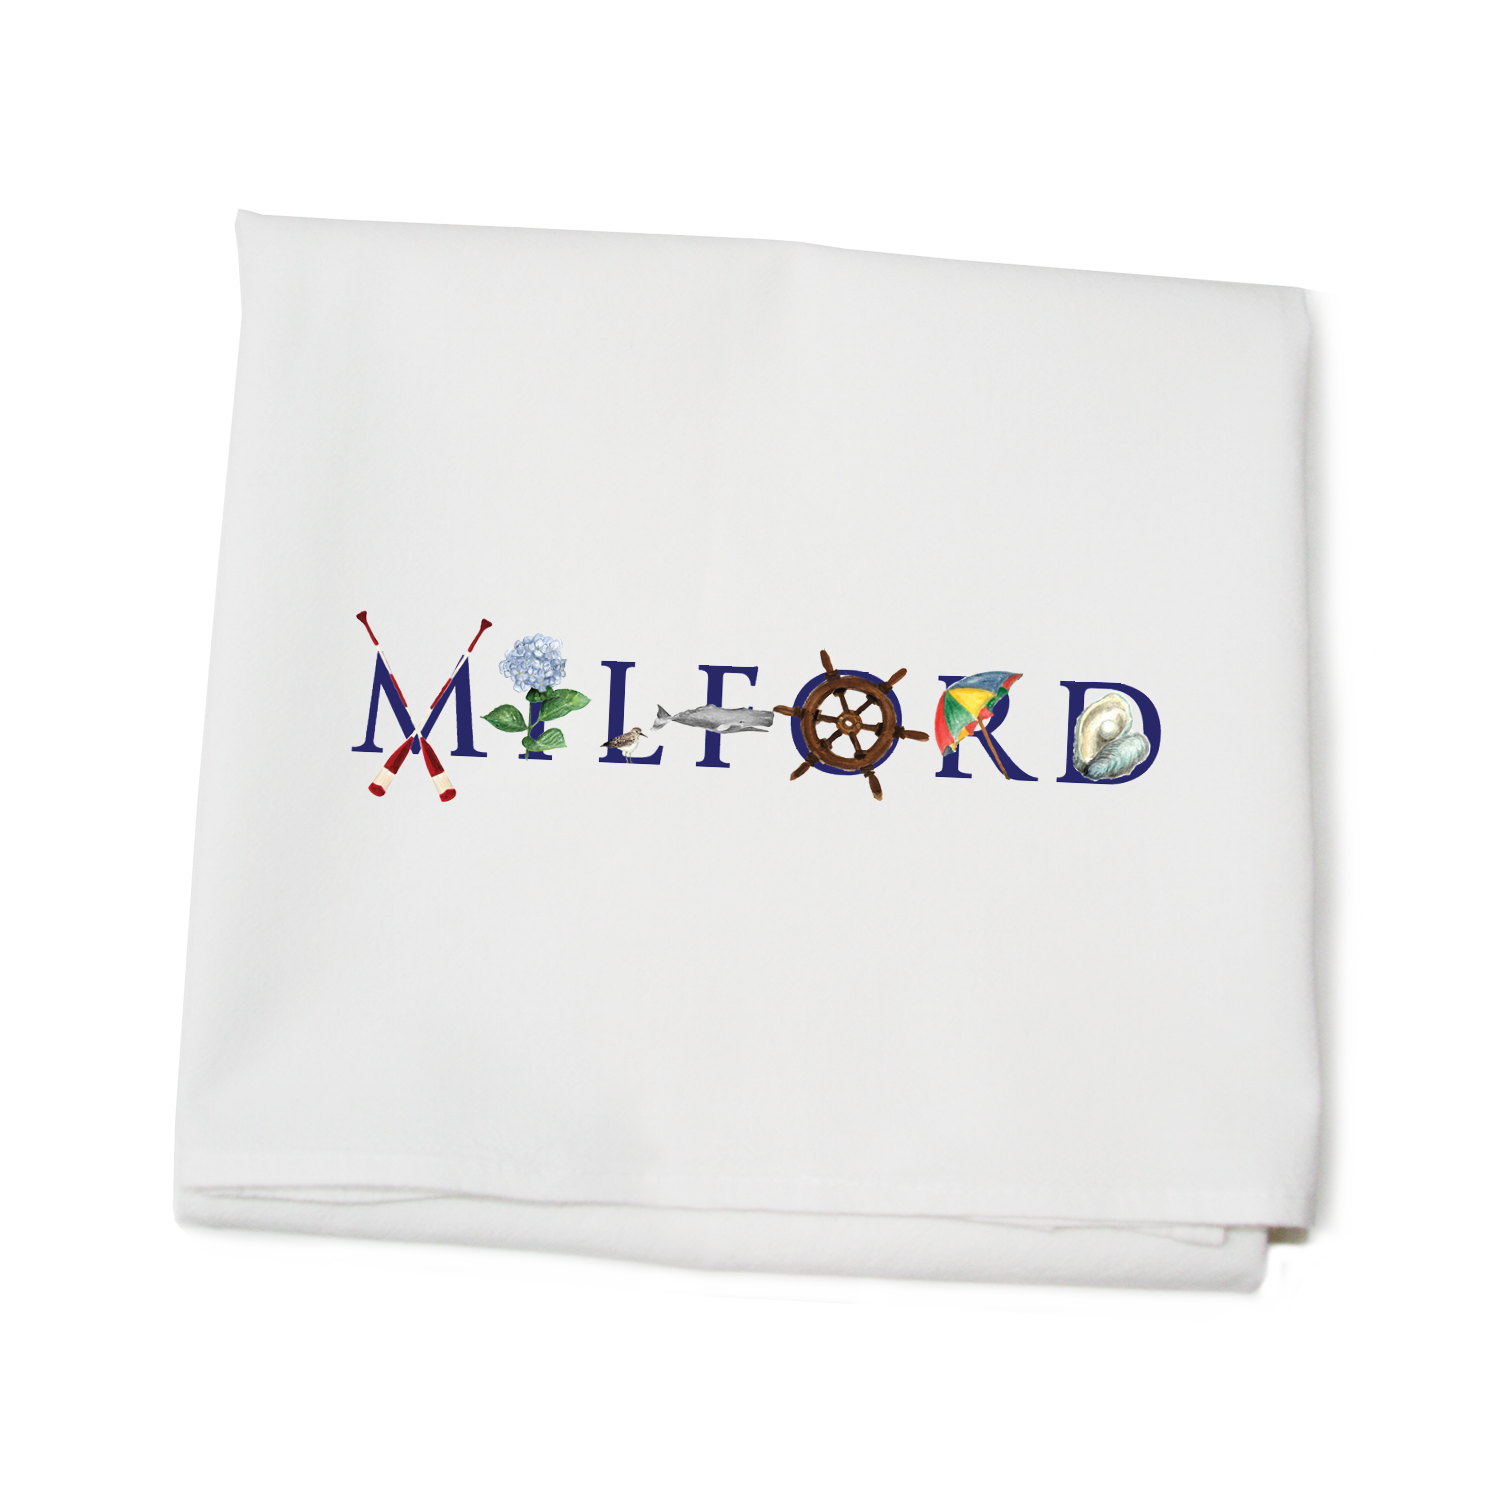 milford, ct flour sack towel